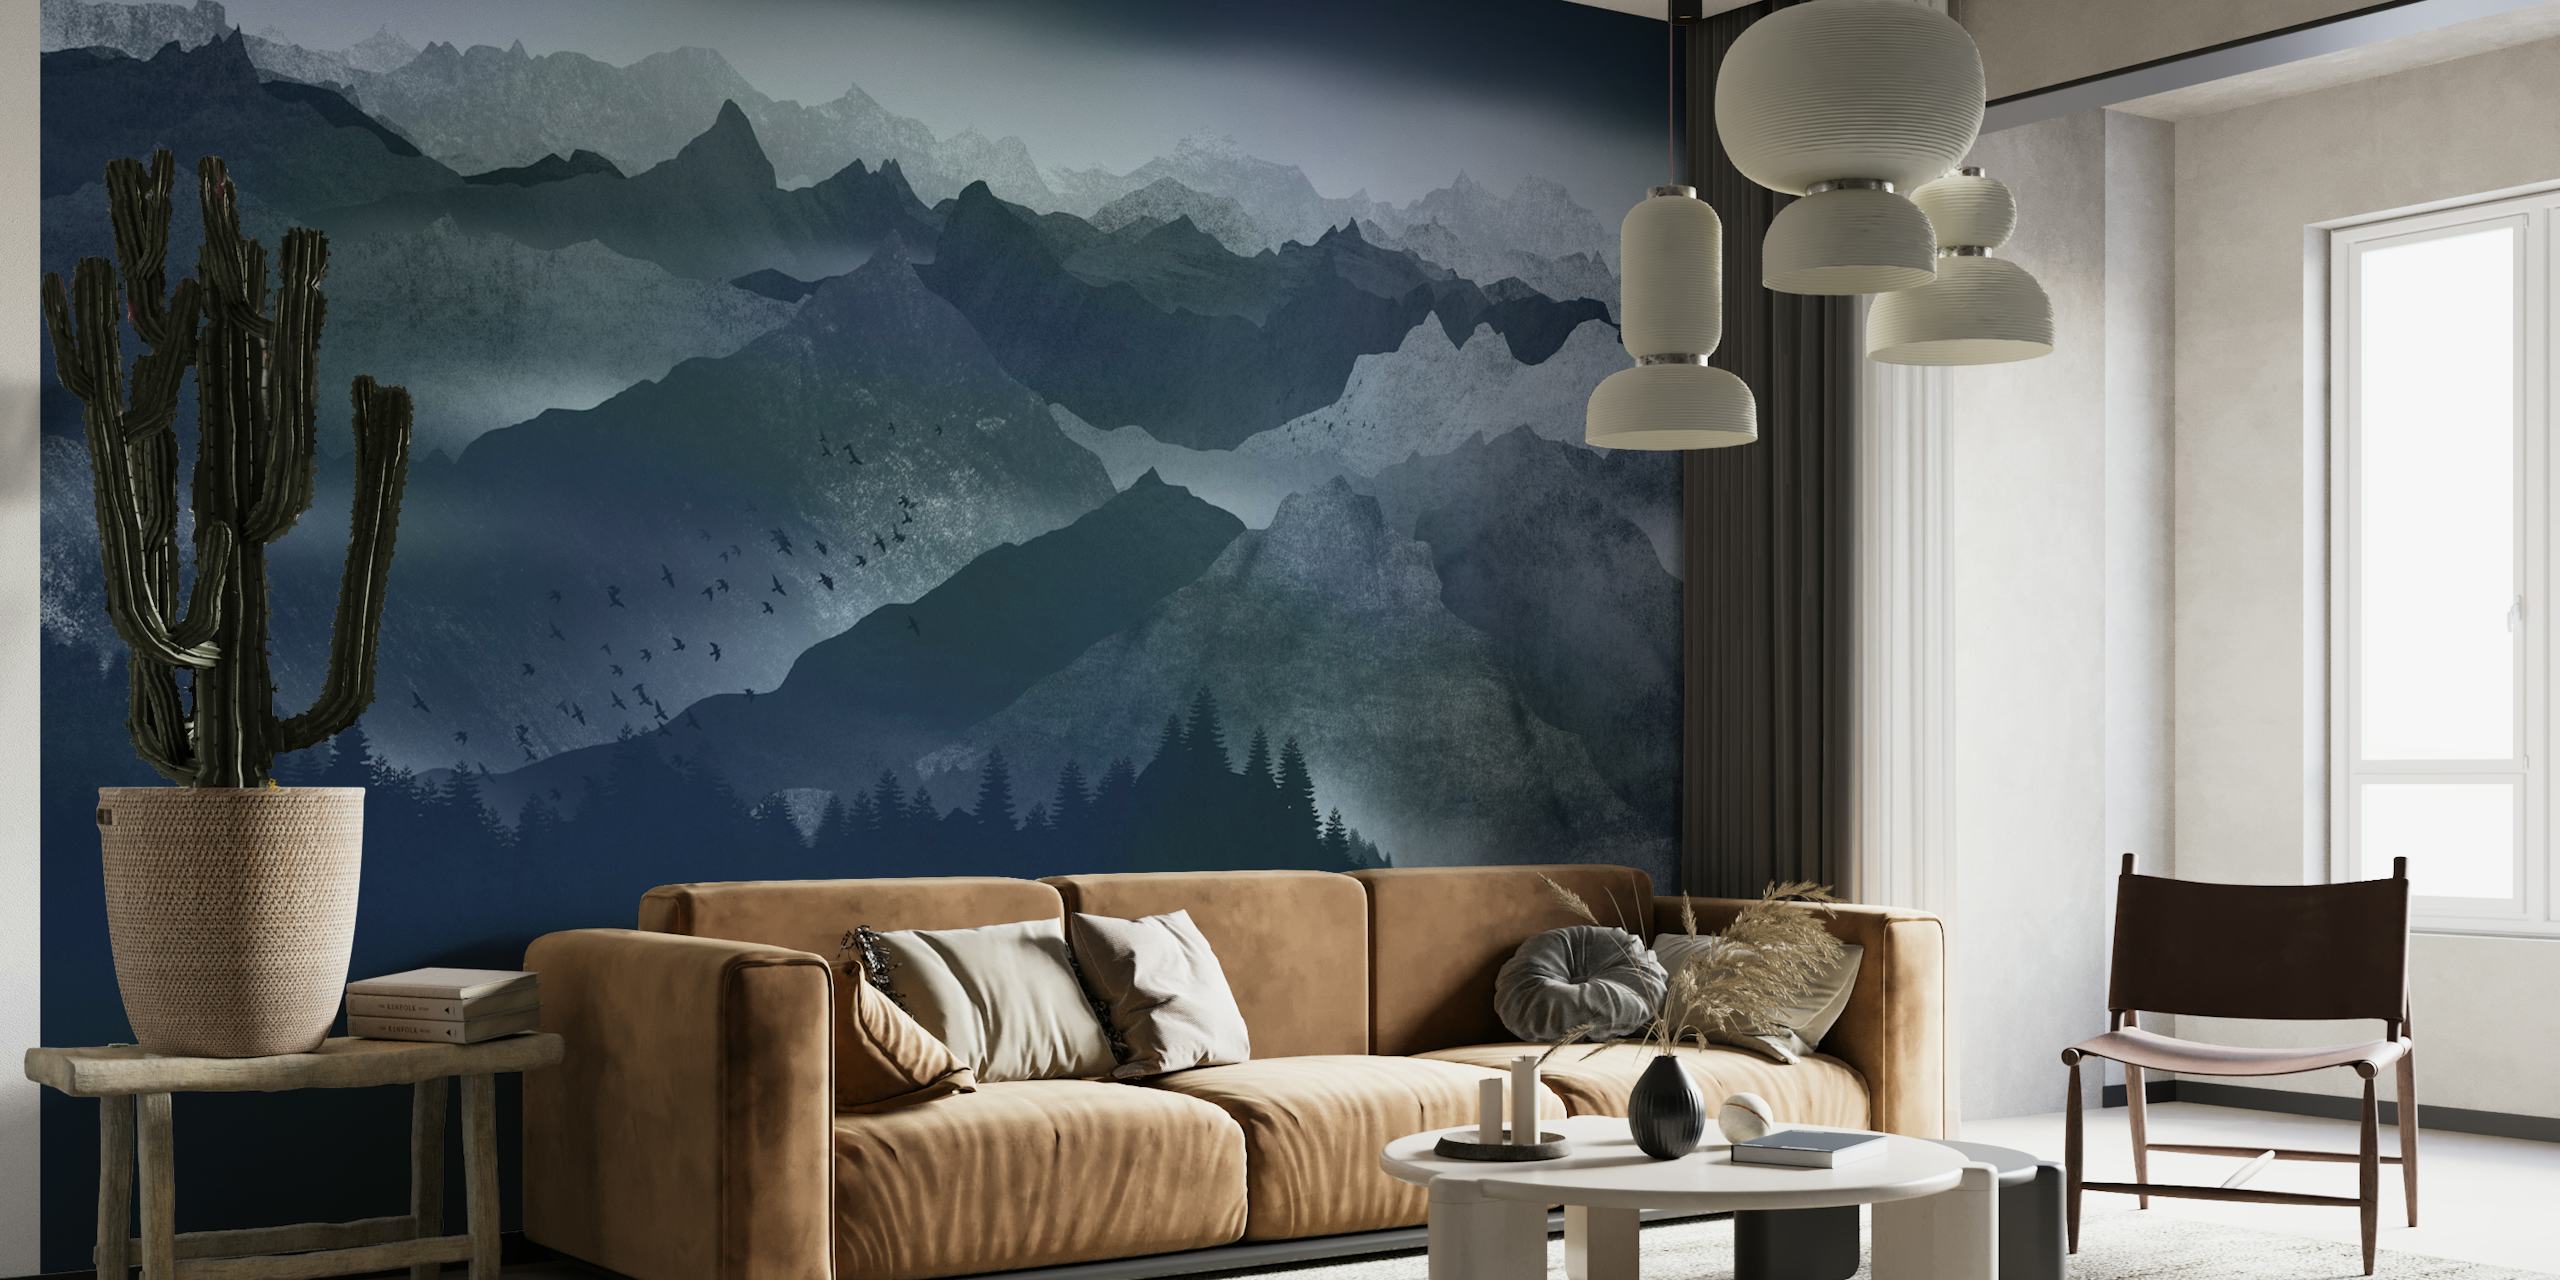 The Blue Dark Mountains wallpaper